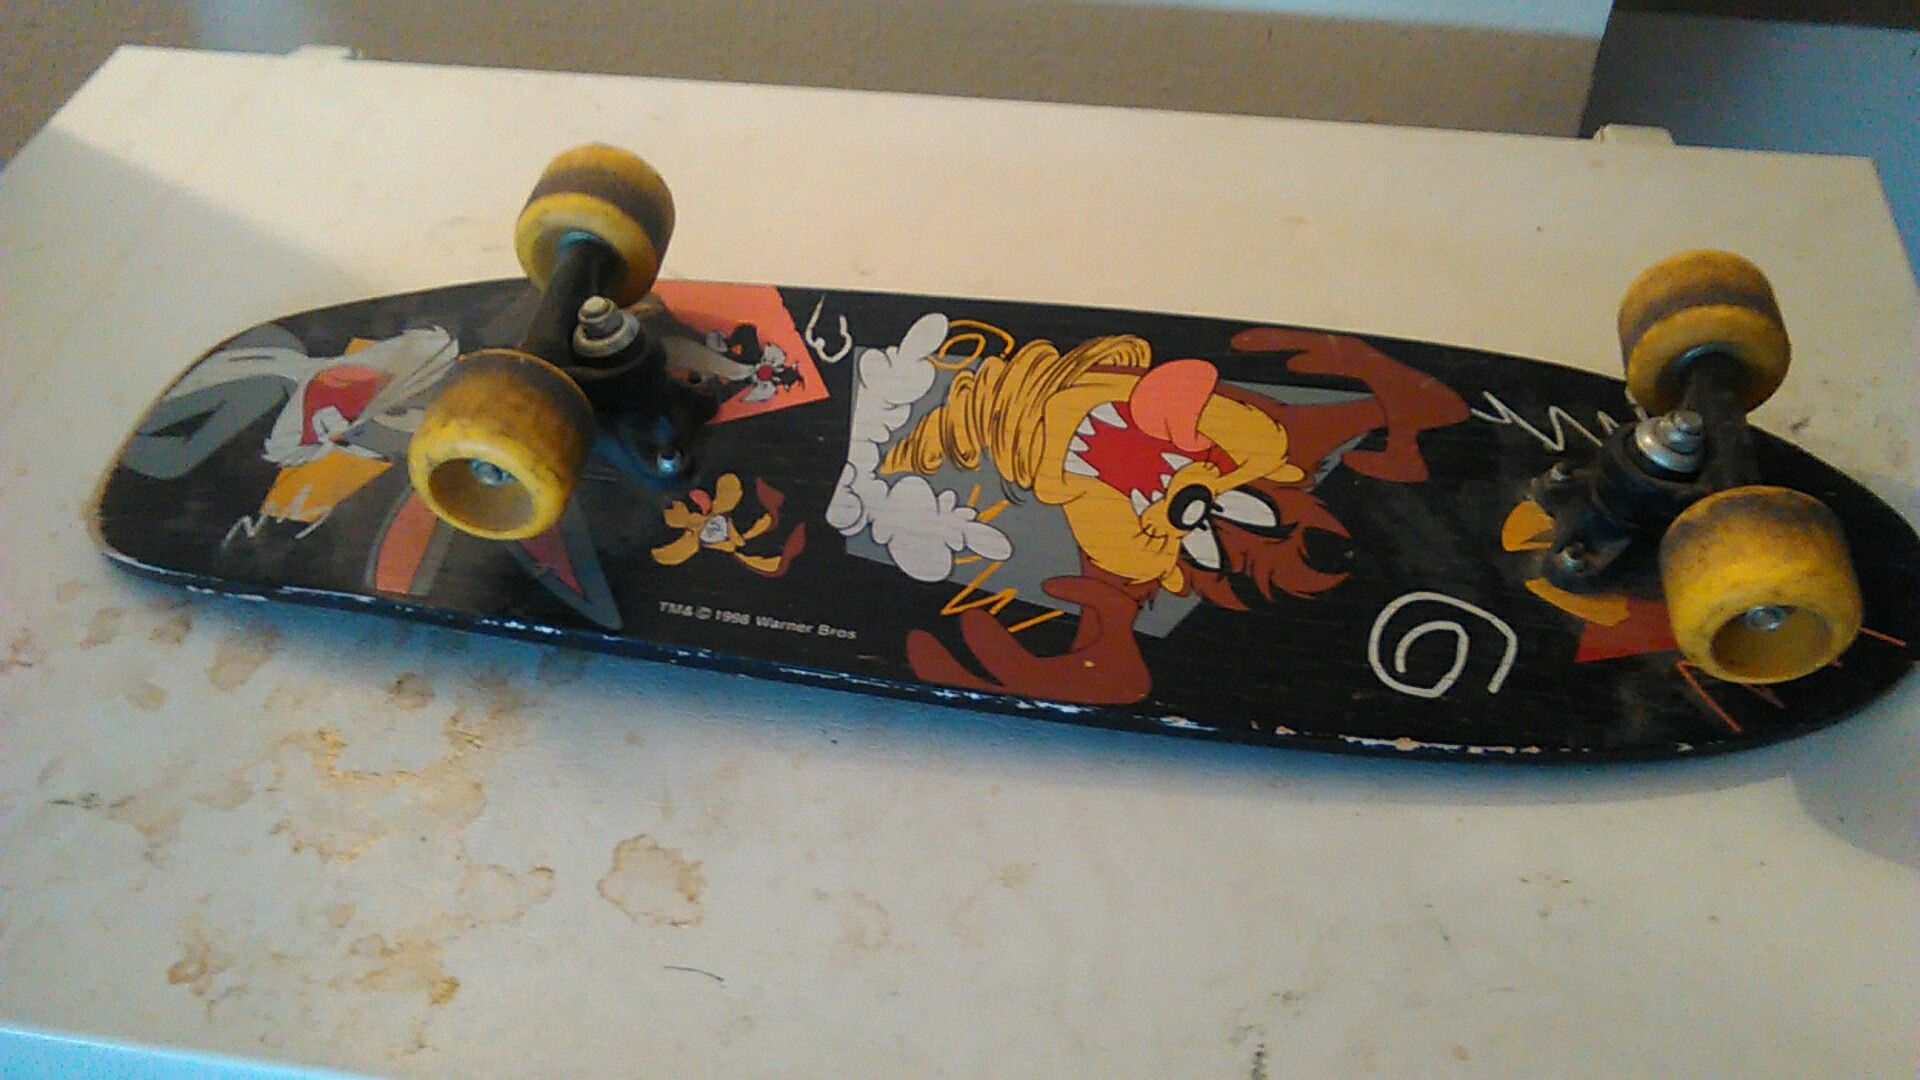 1998 Warner Bros skate board